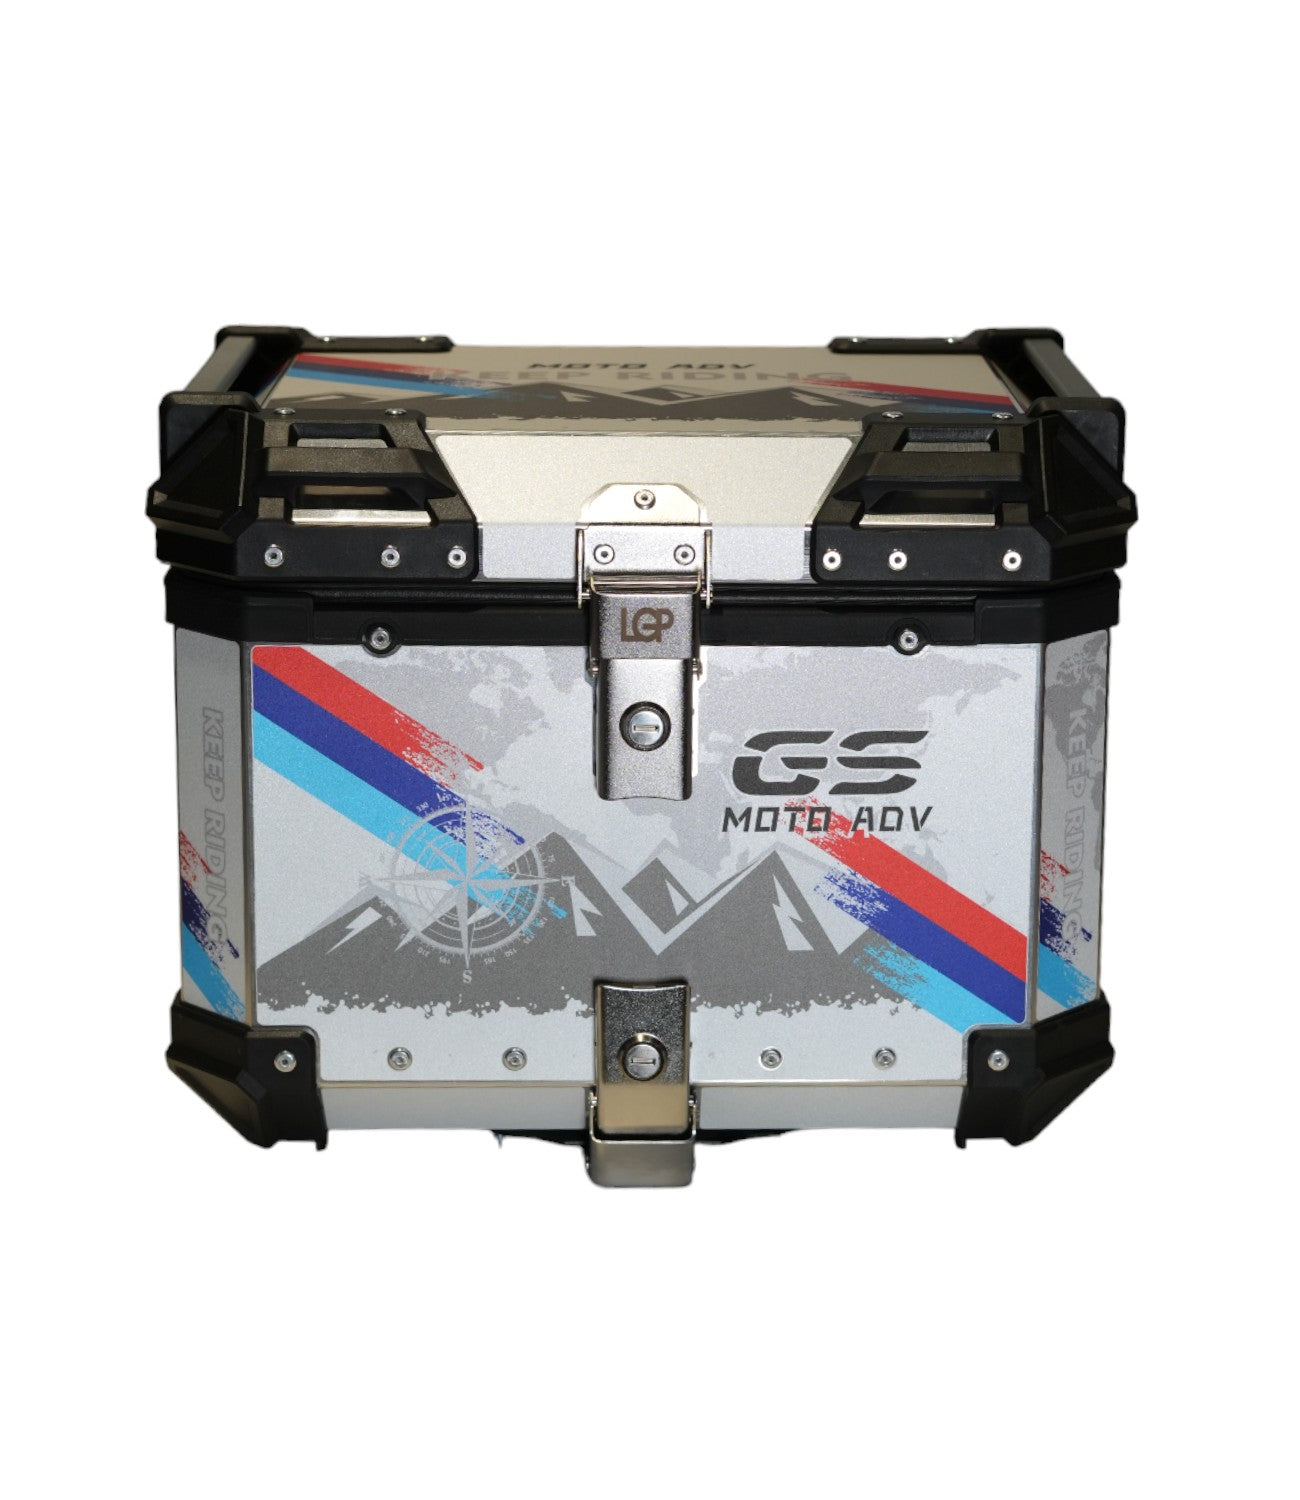 LGP Premium Aluminium Graphics 45L Top Box - Free LGP Mobile Holder